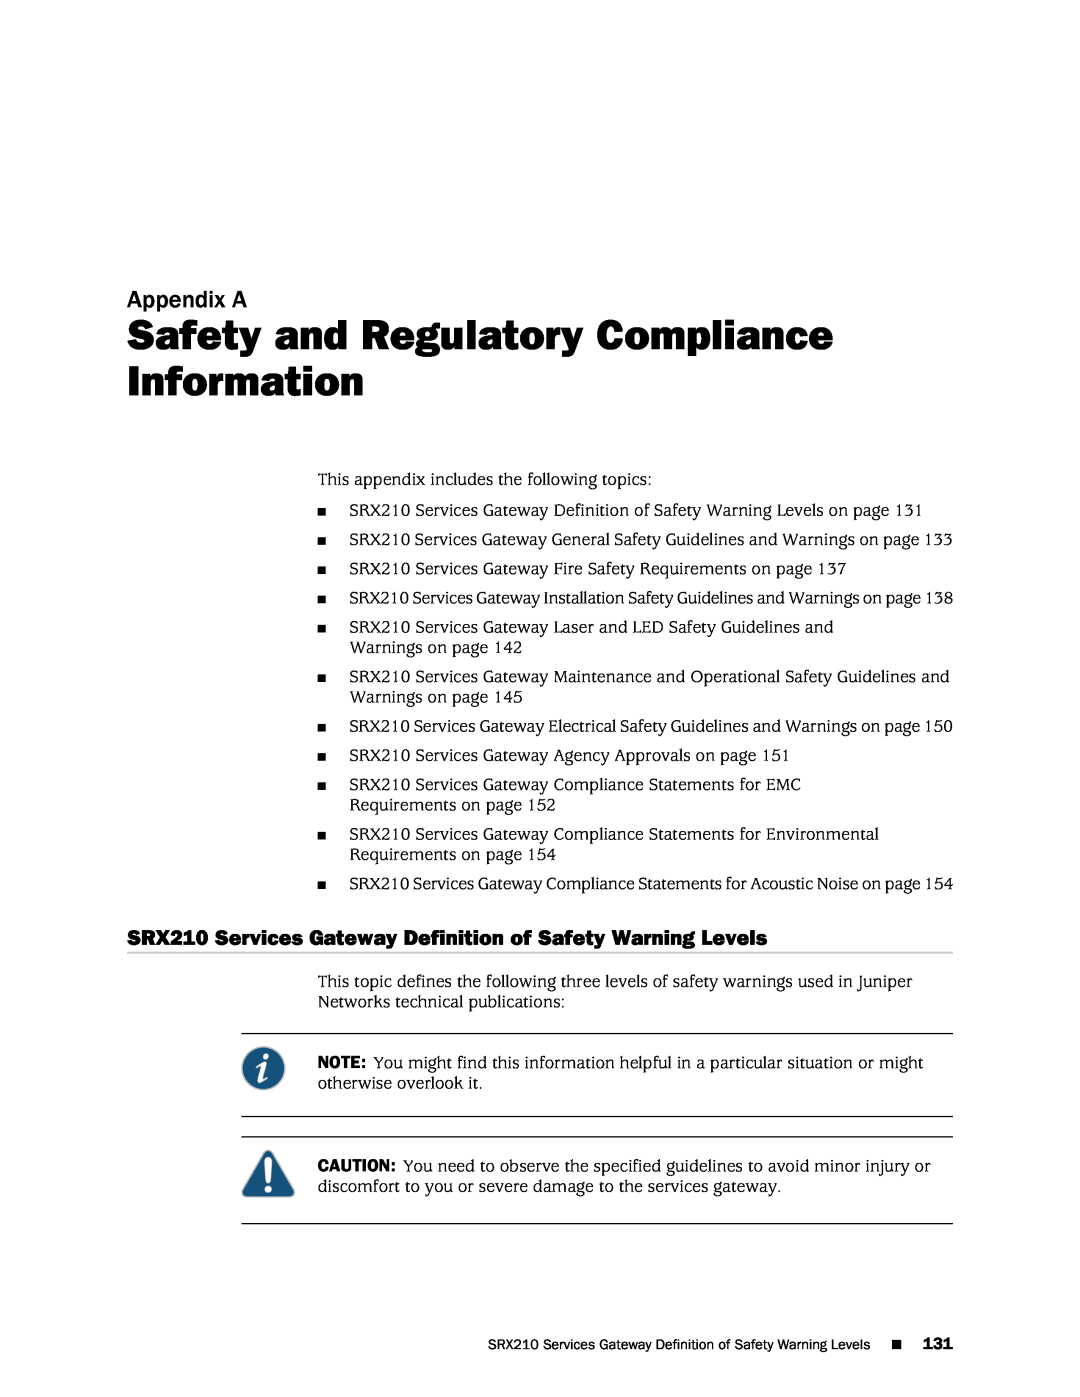 Juniper Networks SRX 210 manual Safety and Regulatory Compliance Information, Appendix A 